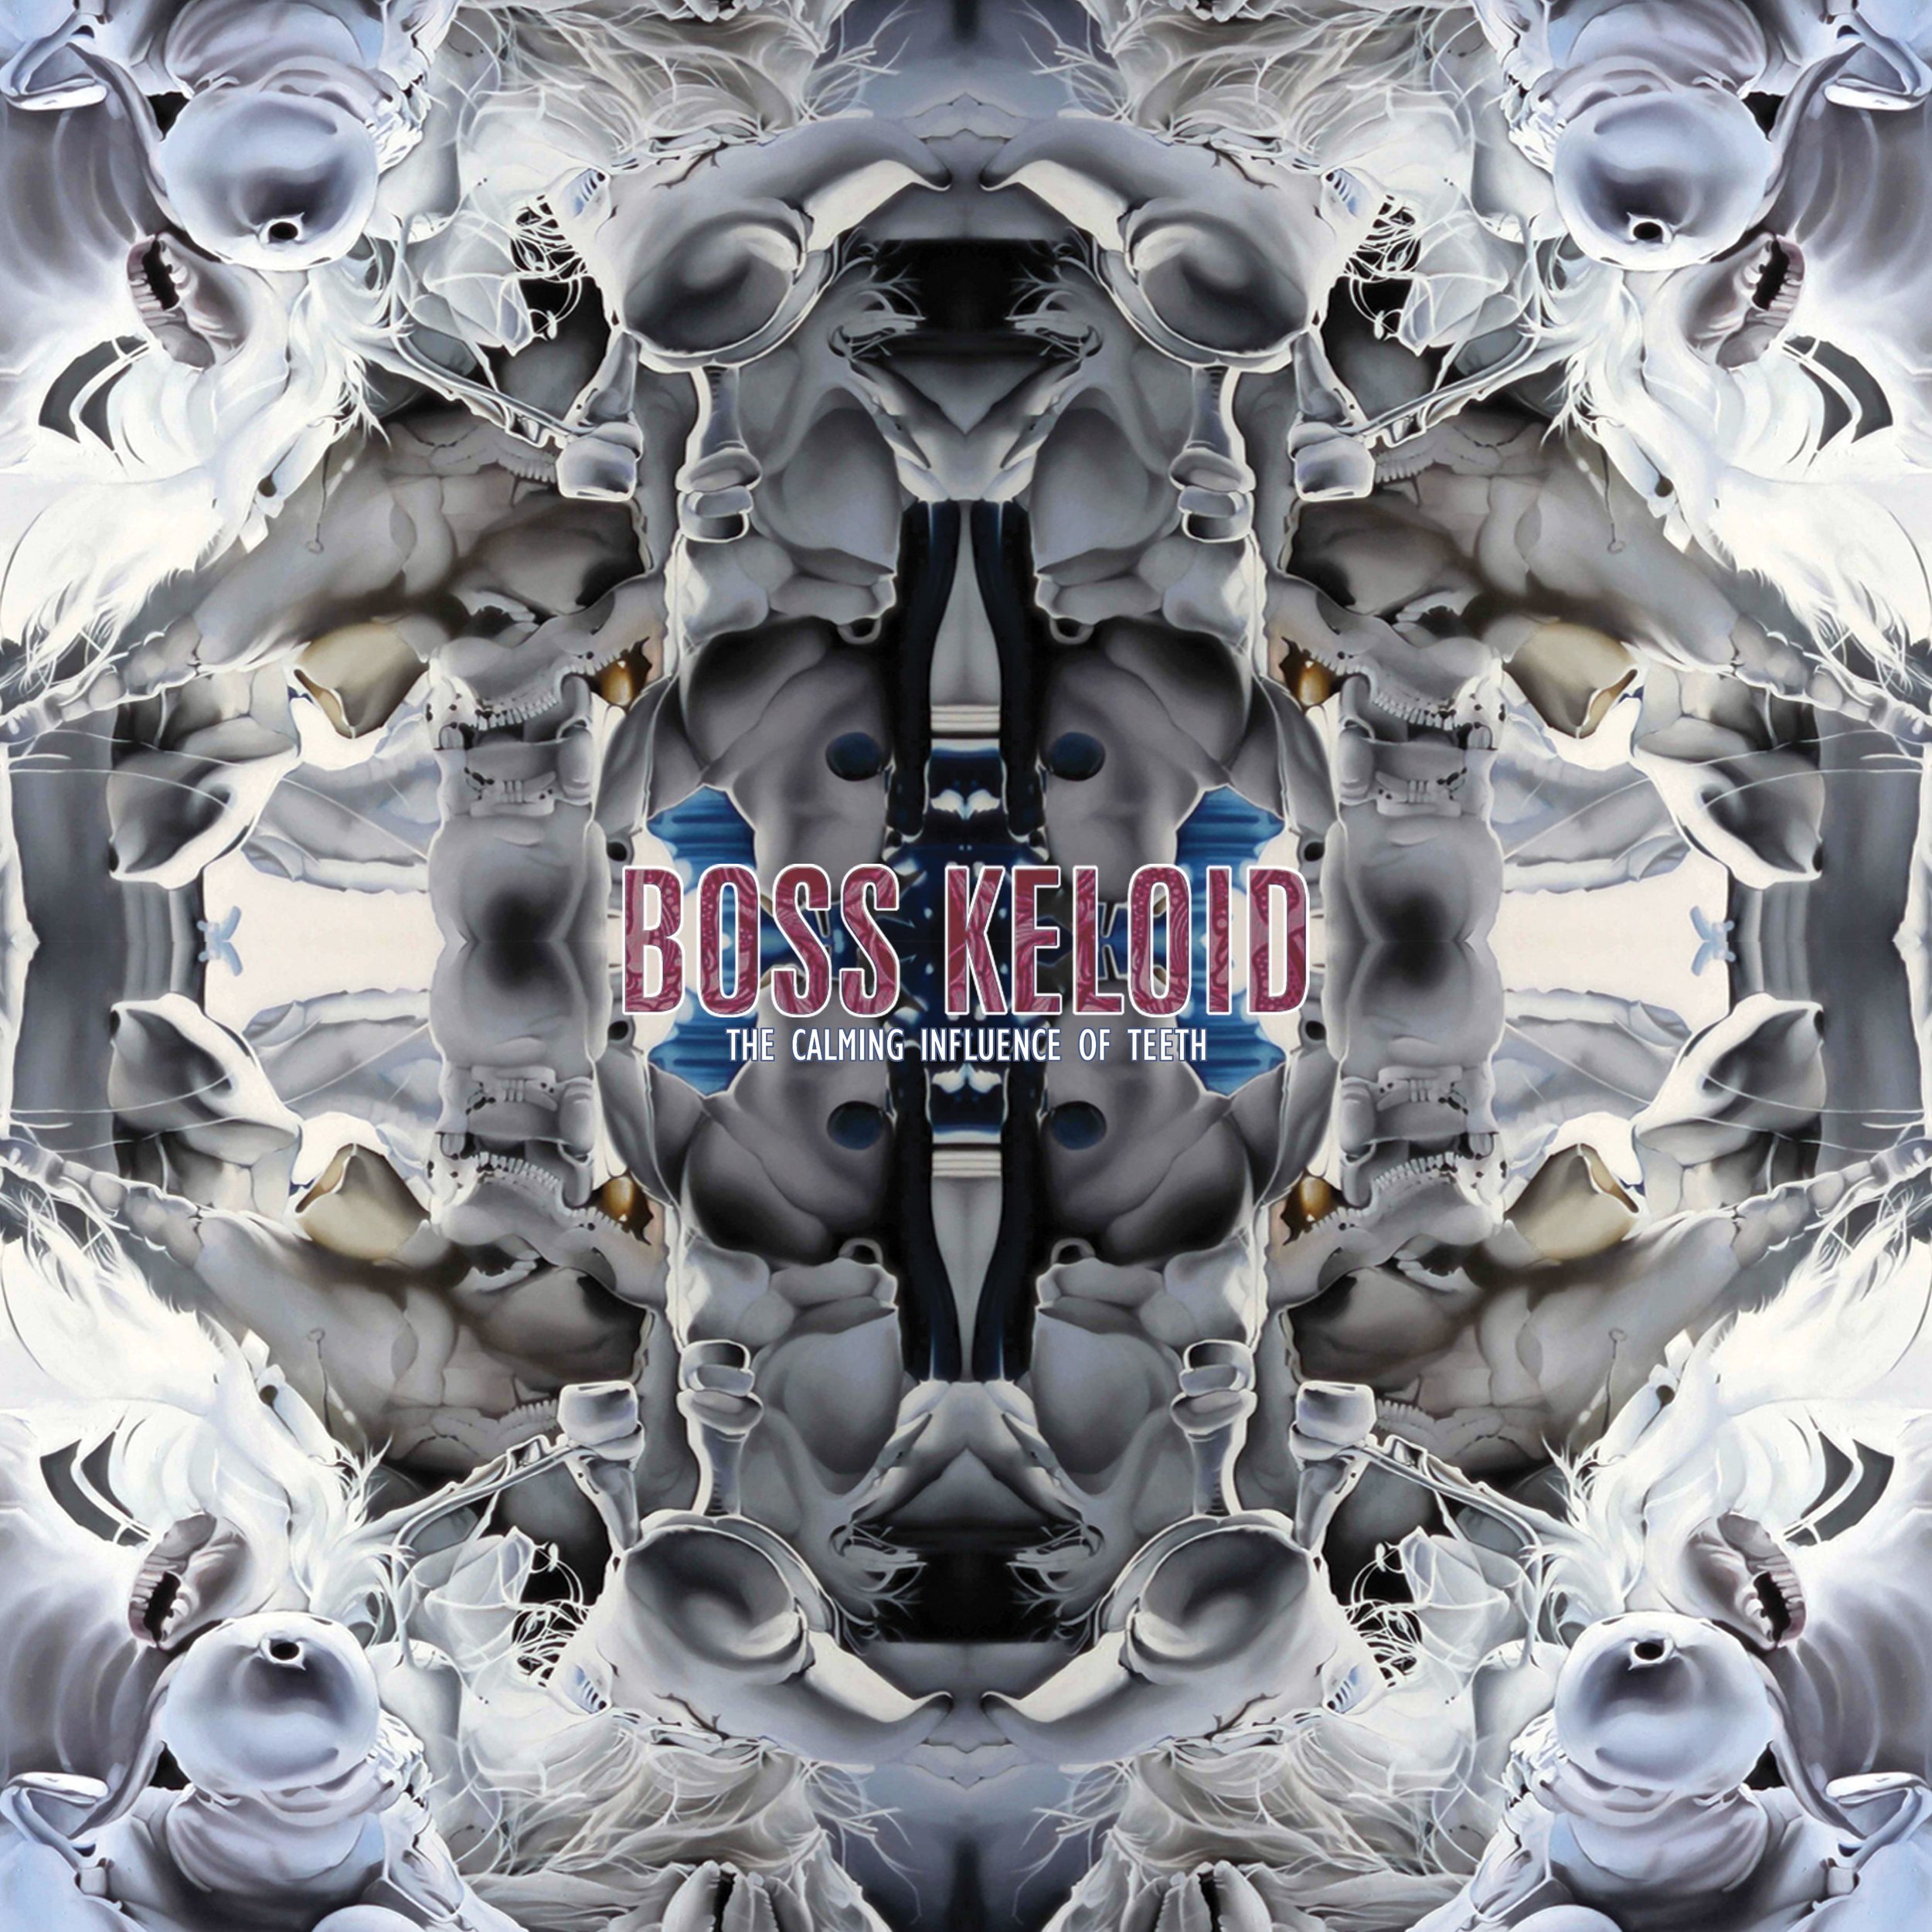 Boss Keloid - The Calming Influence Of Teeth - Cover.jpg